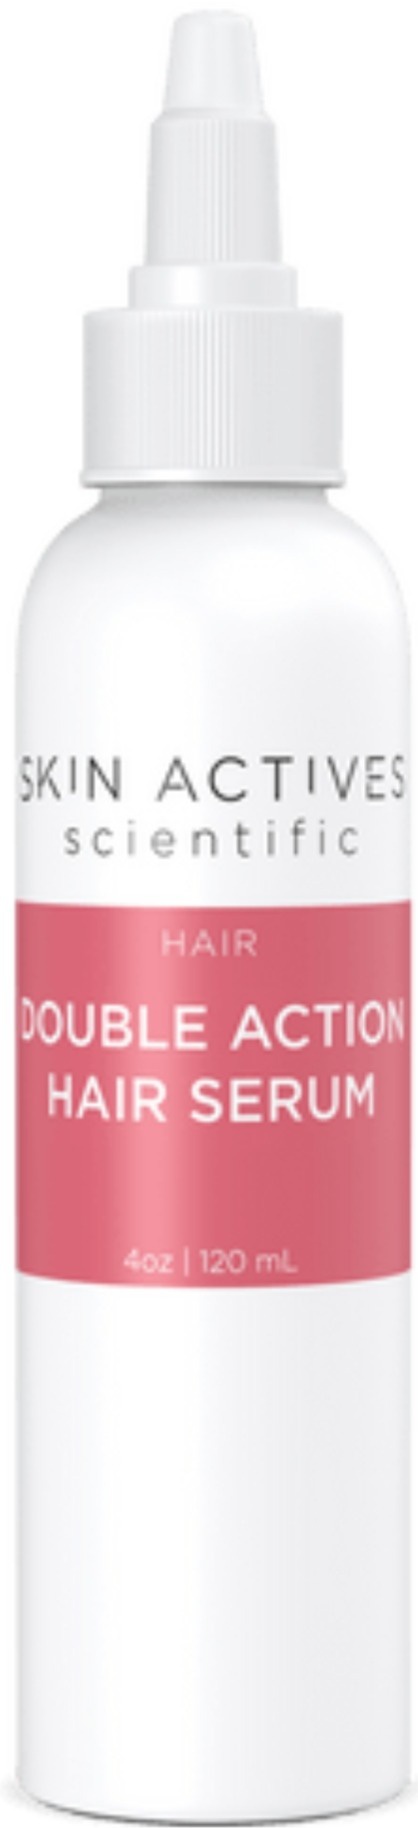 Skin Actives Scientific Double Action Hair Serum